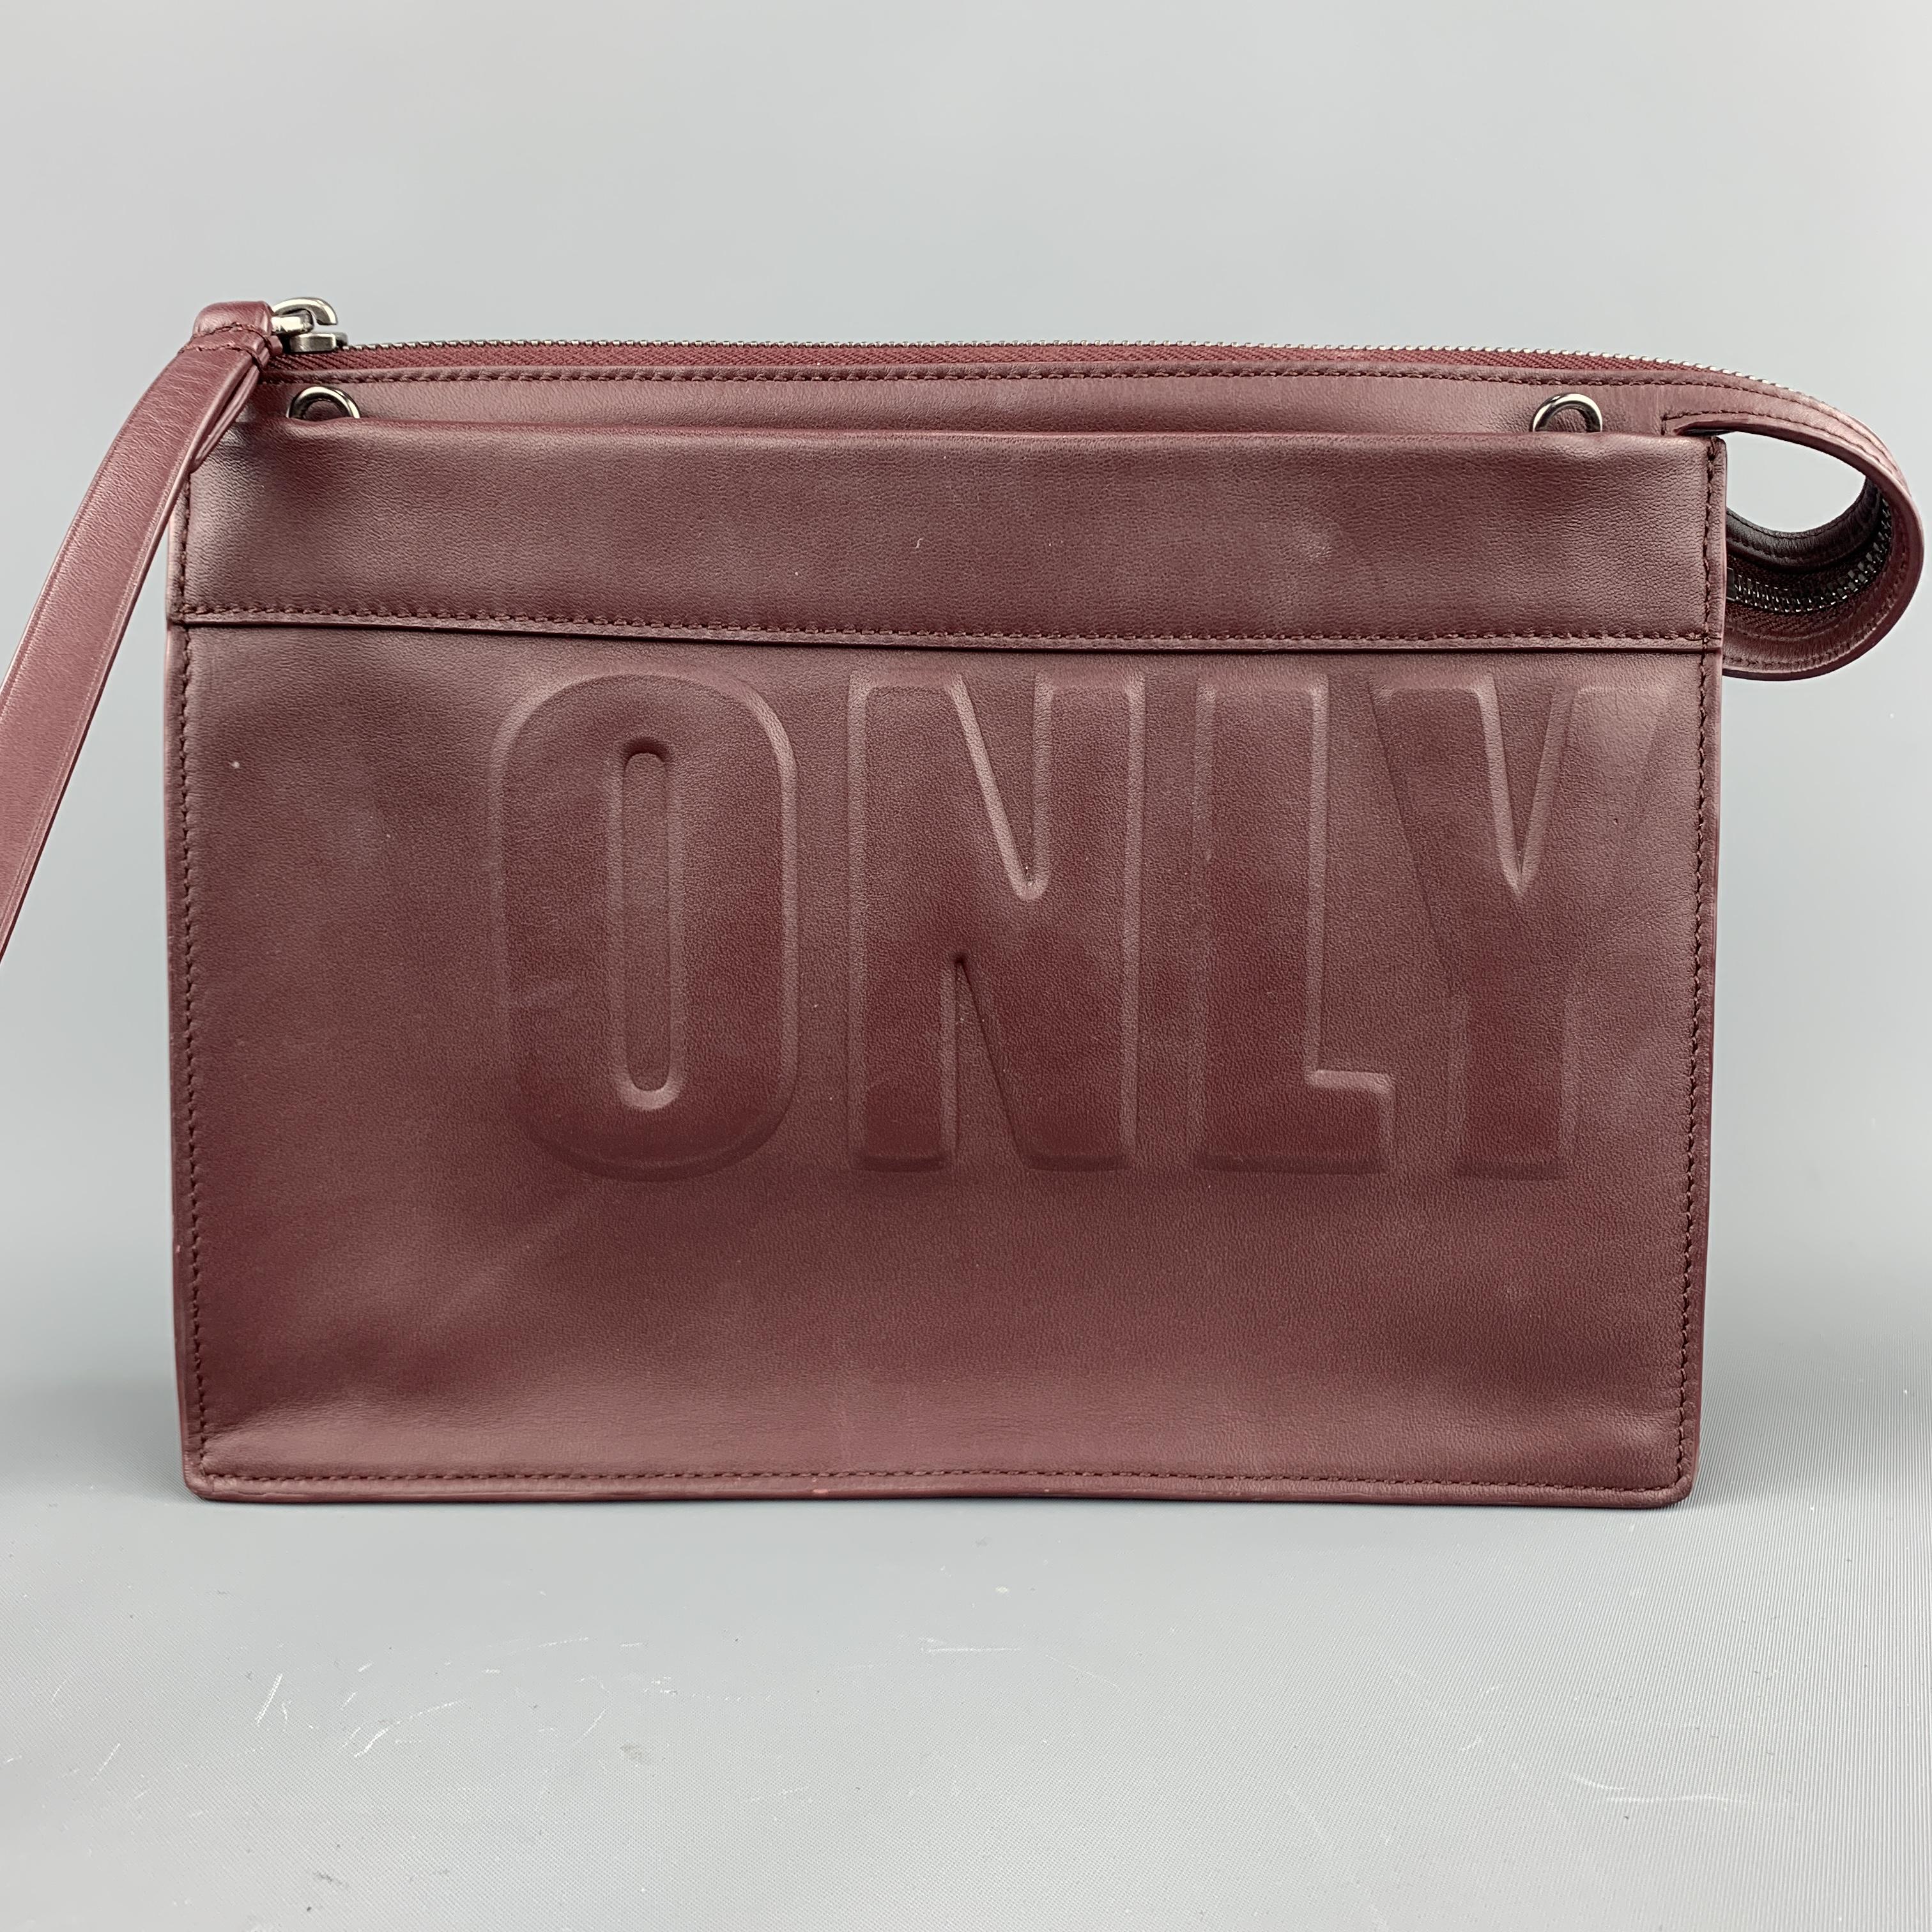 3.1 PHILLIP LIM Burgundy Leather CASH ONLY Clutch Handbag 1